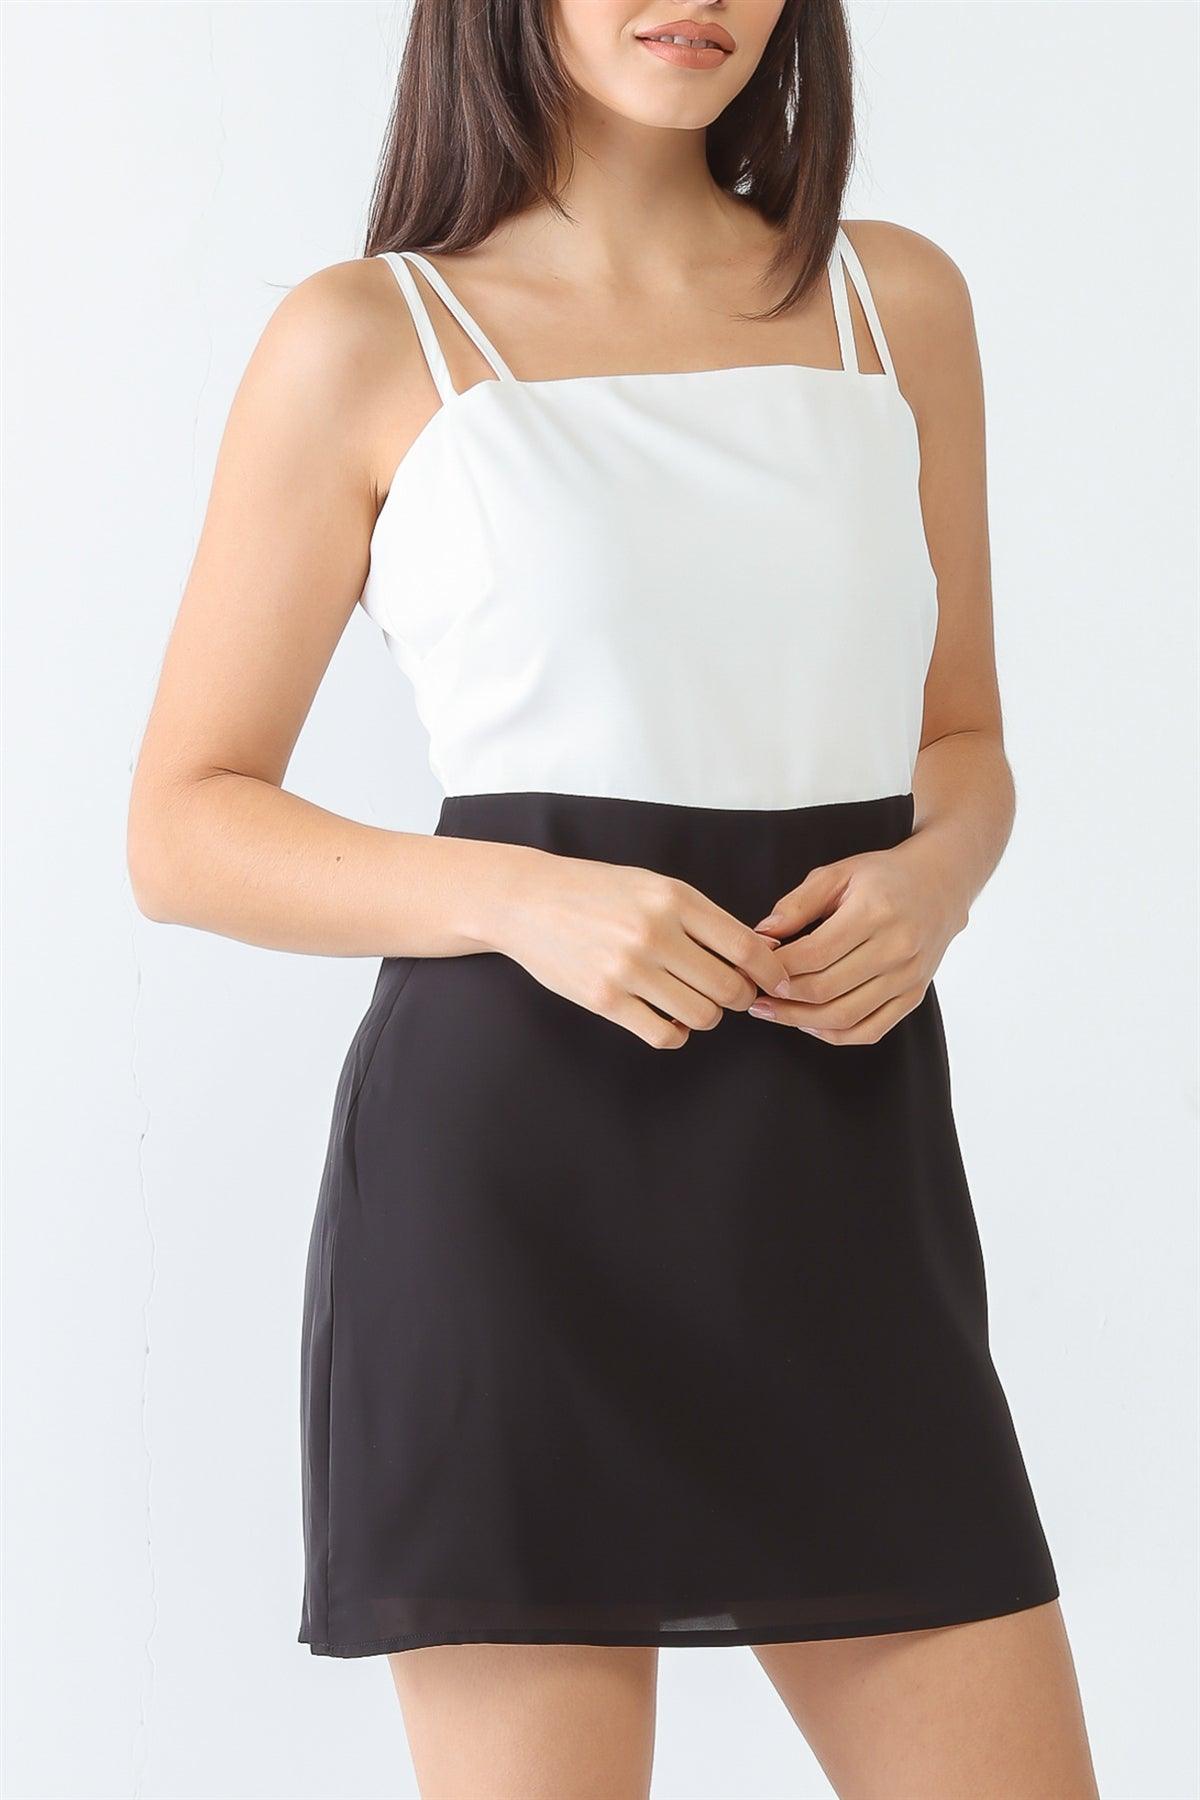 Black & White Sleeveless Strappy Mini Dress /3-2-1